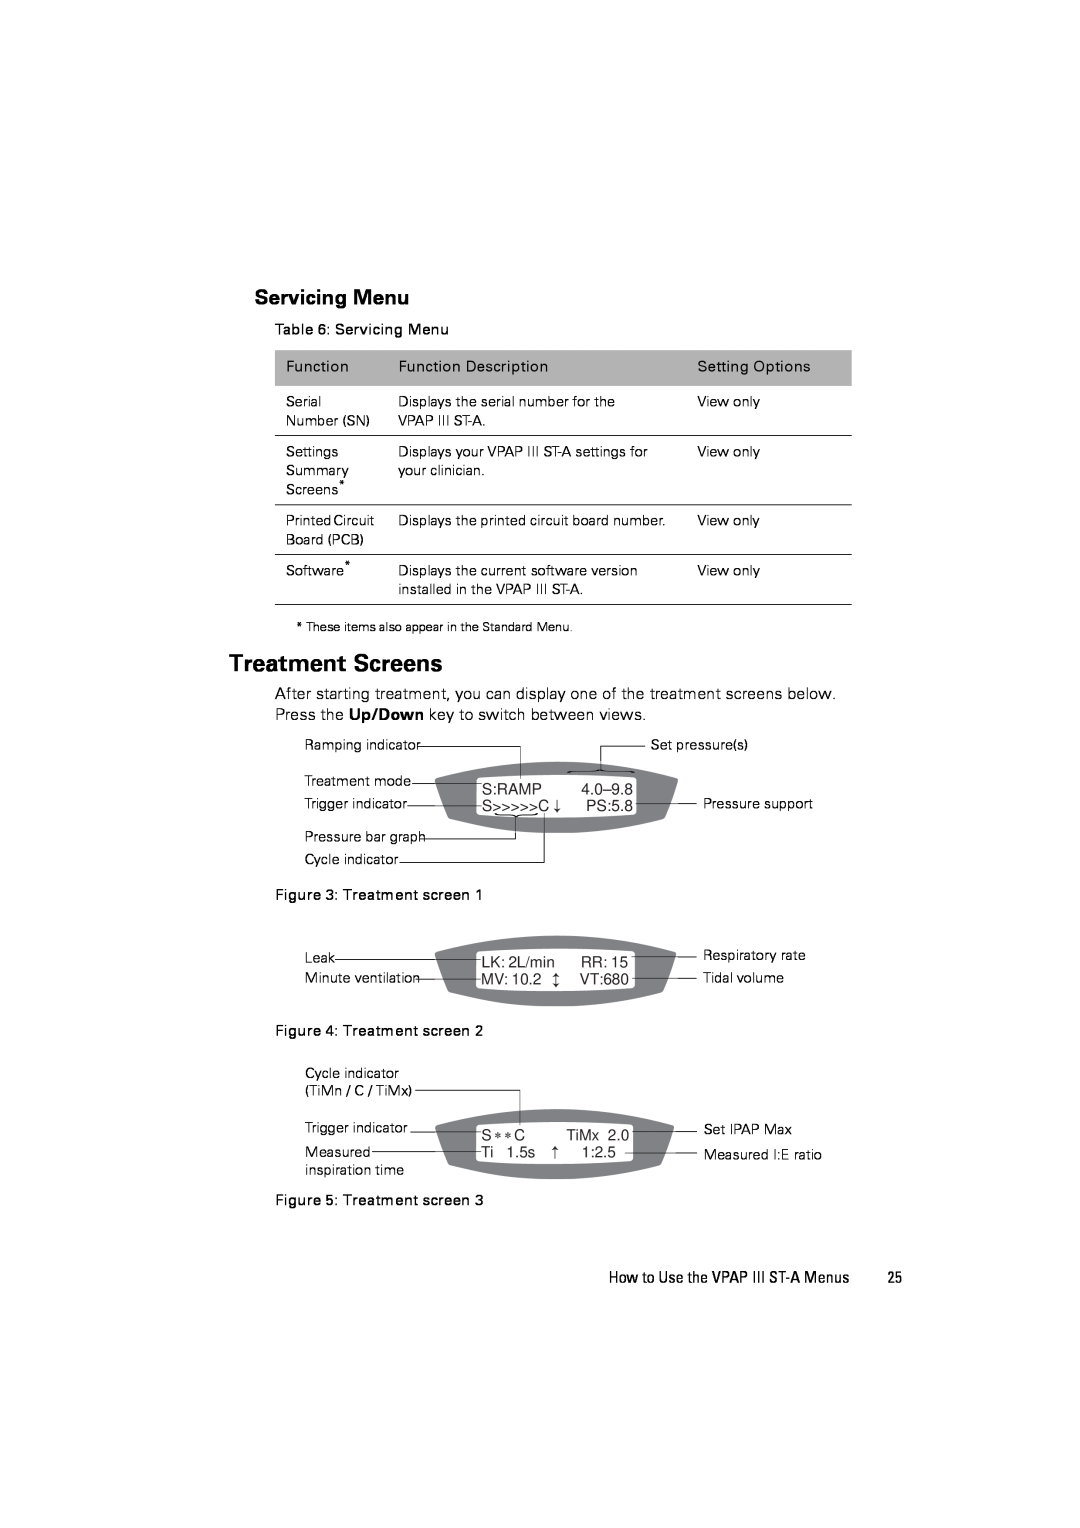 ResMed III ST-A user manual Treatment Screens, Servicing Menu 